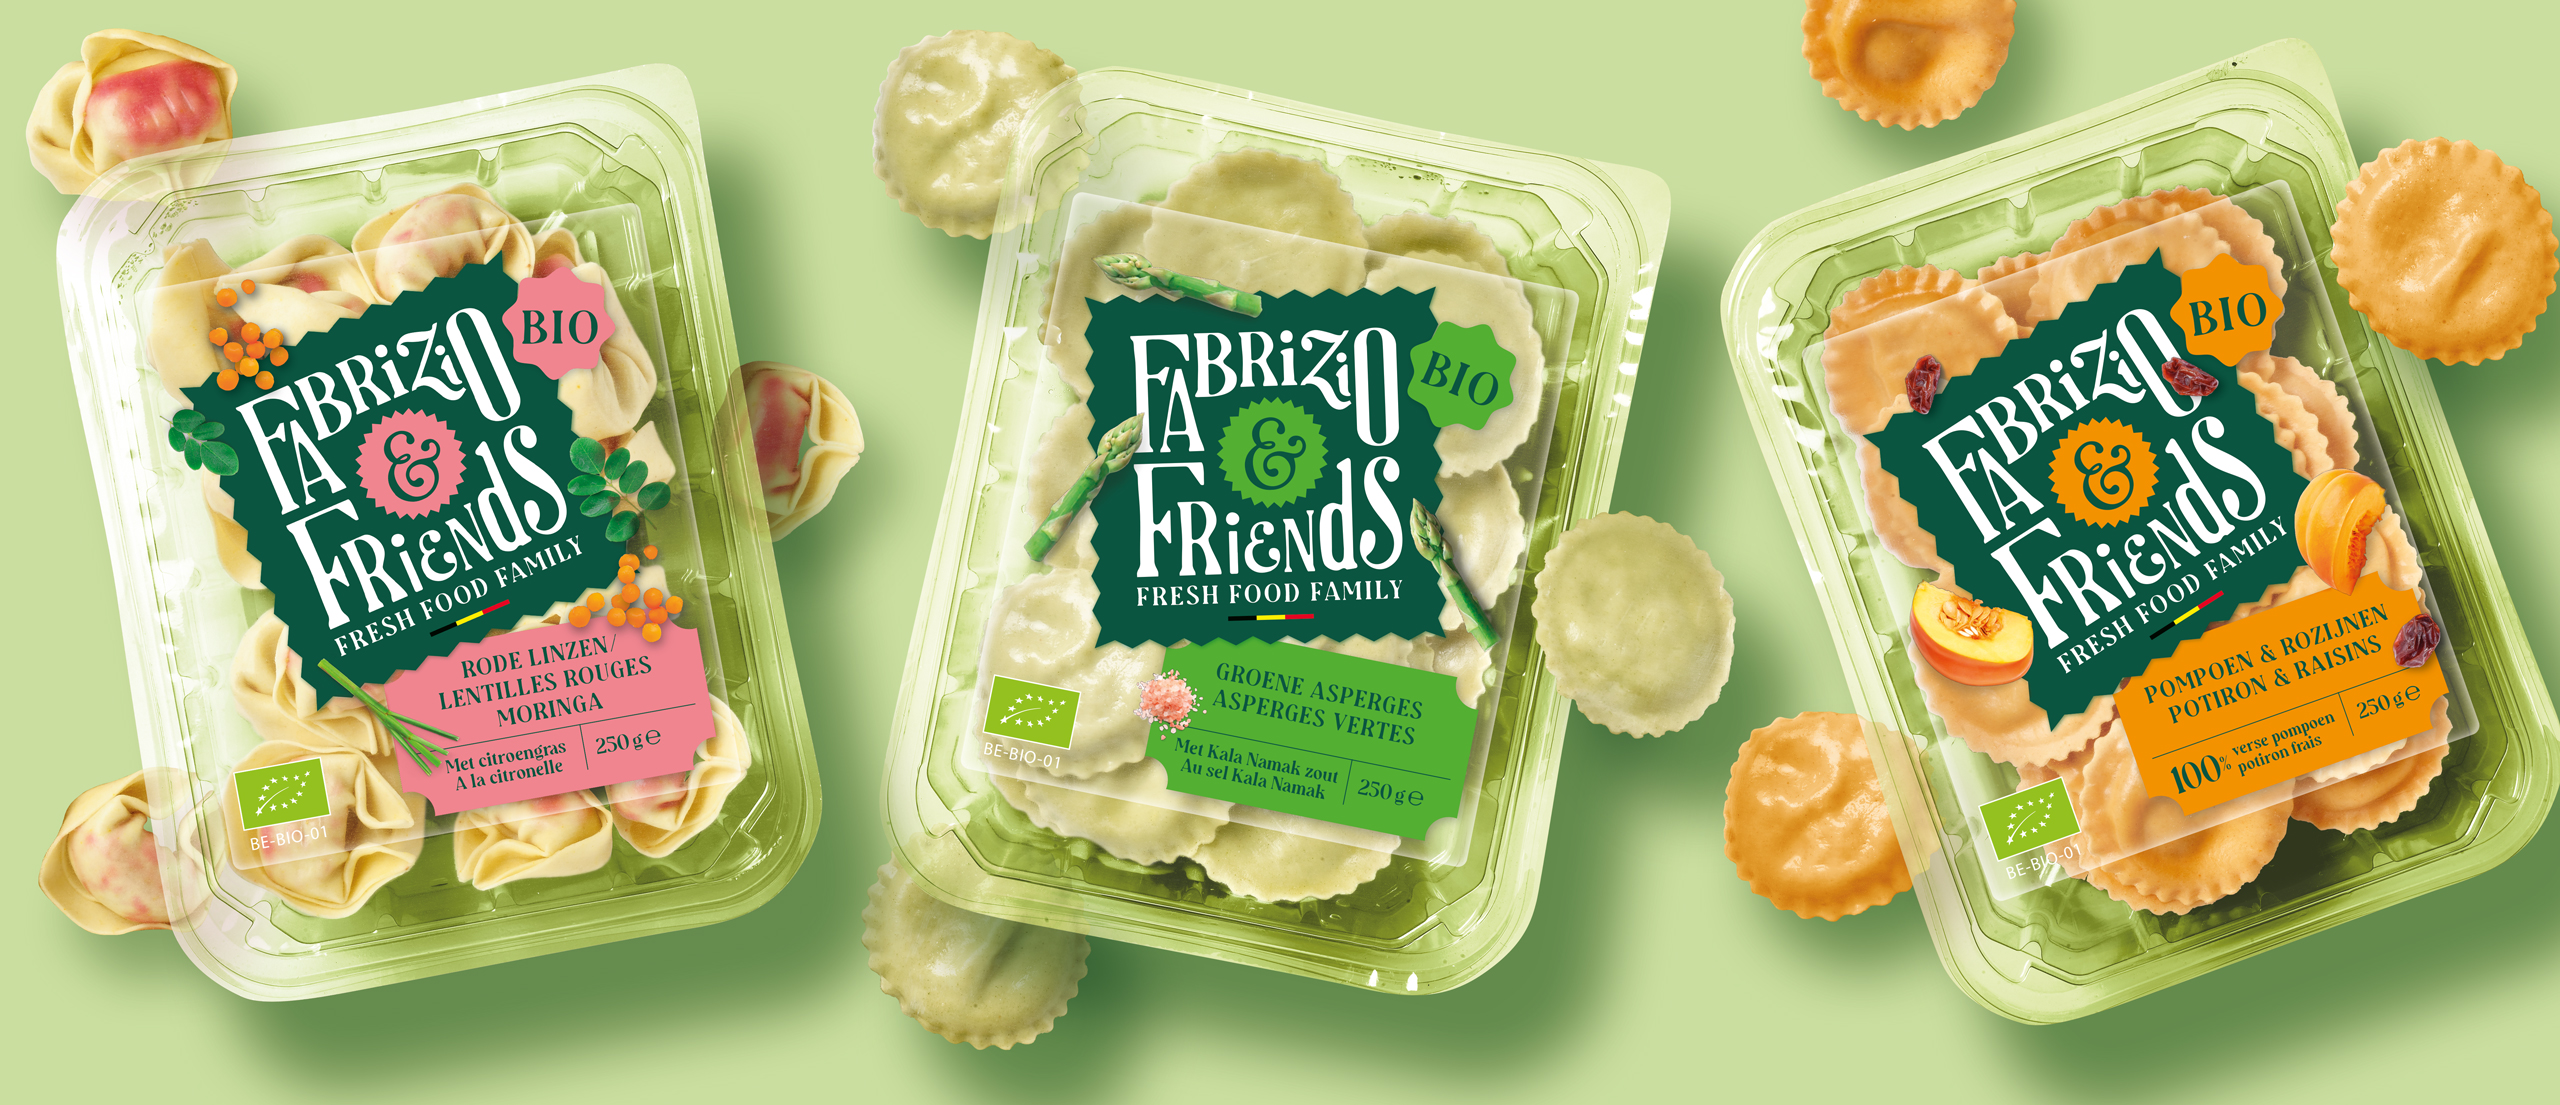 Quatre Mains package design - Package design Fresh pasta packaging for Fabrizio & Friends